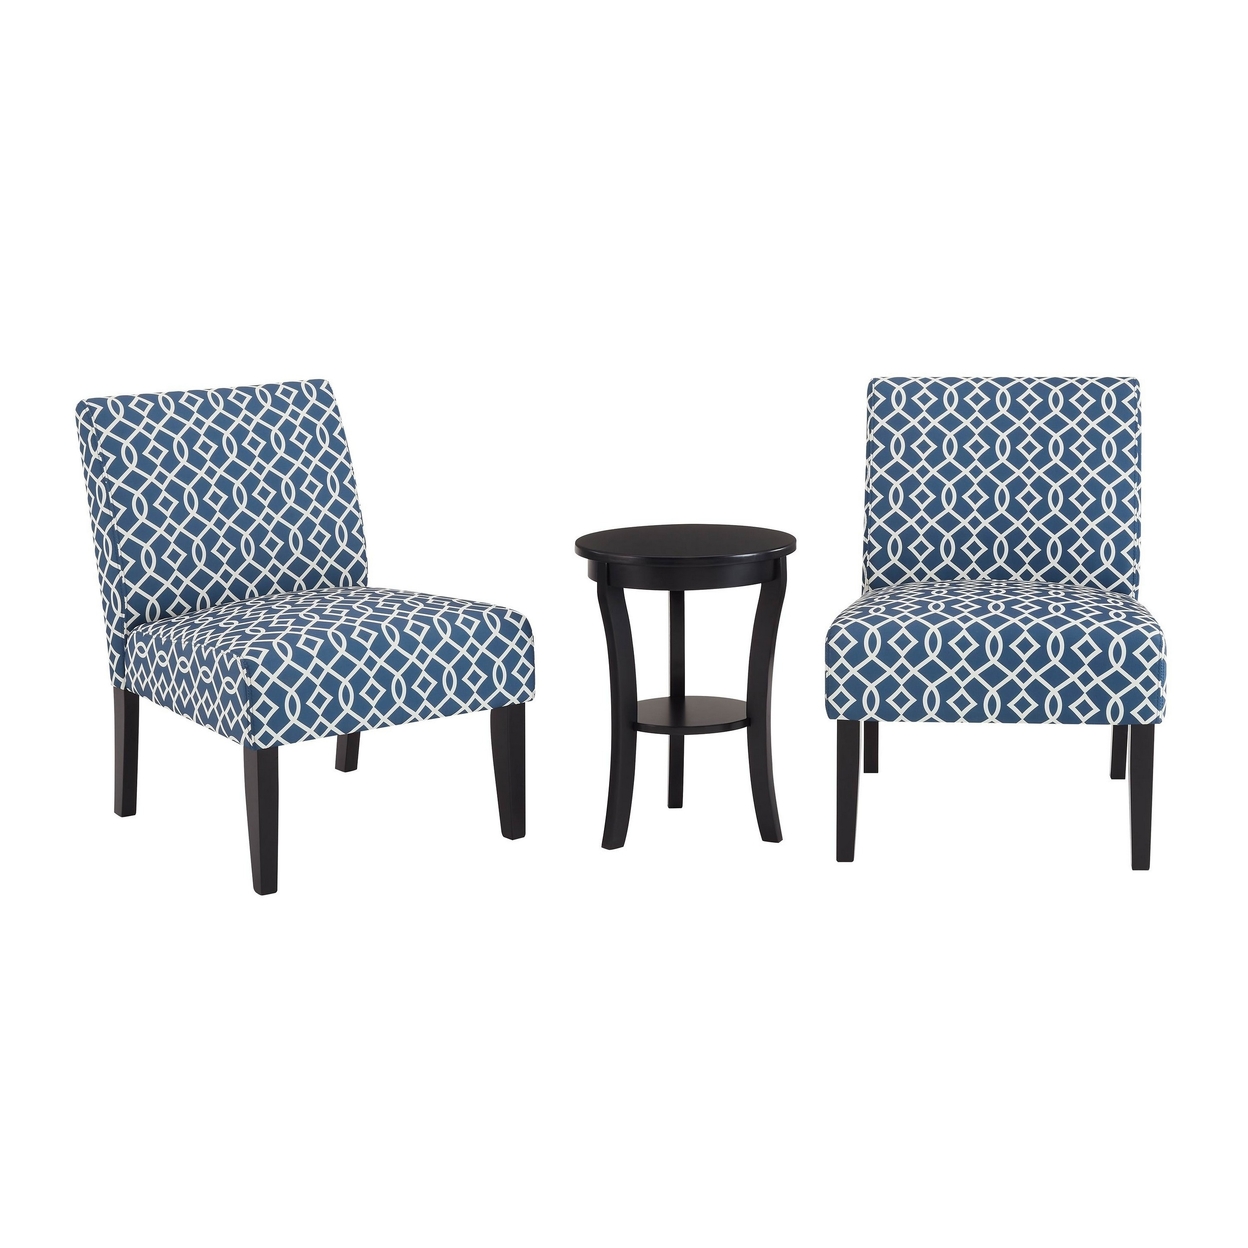 Remi 3 Piece Seating Set, 2 Chairs, Trellis Print, Blue Fabric Upholstery- Saltoro Sherpi